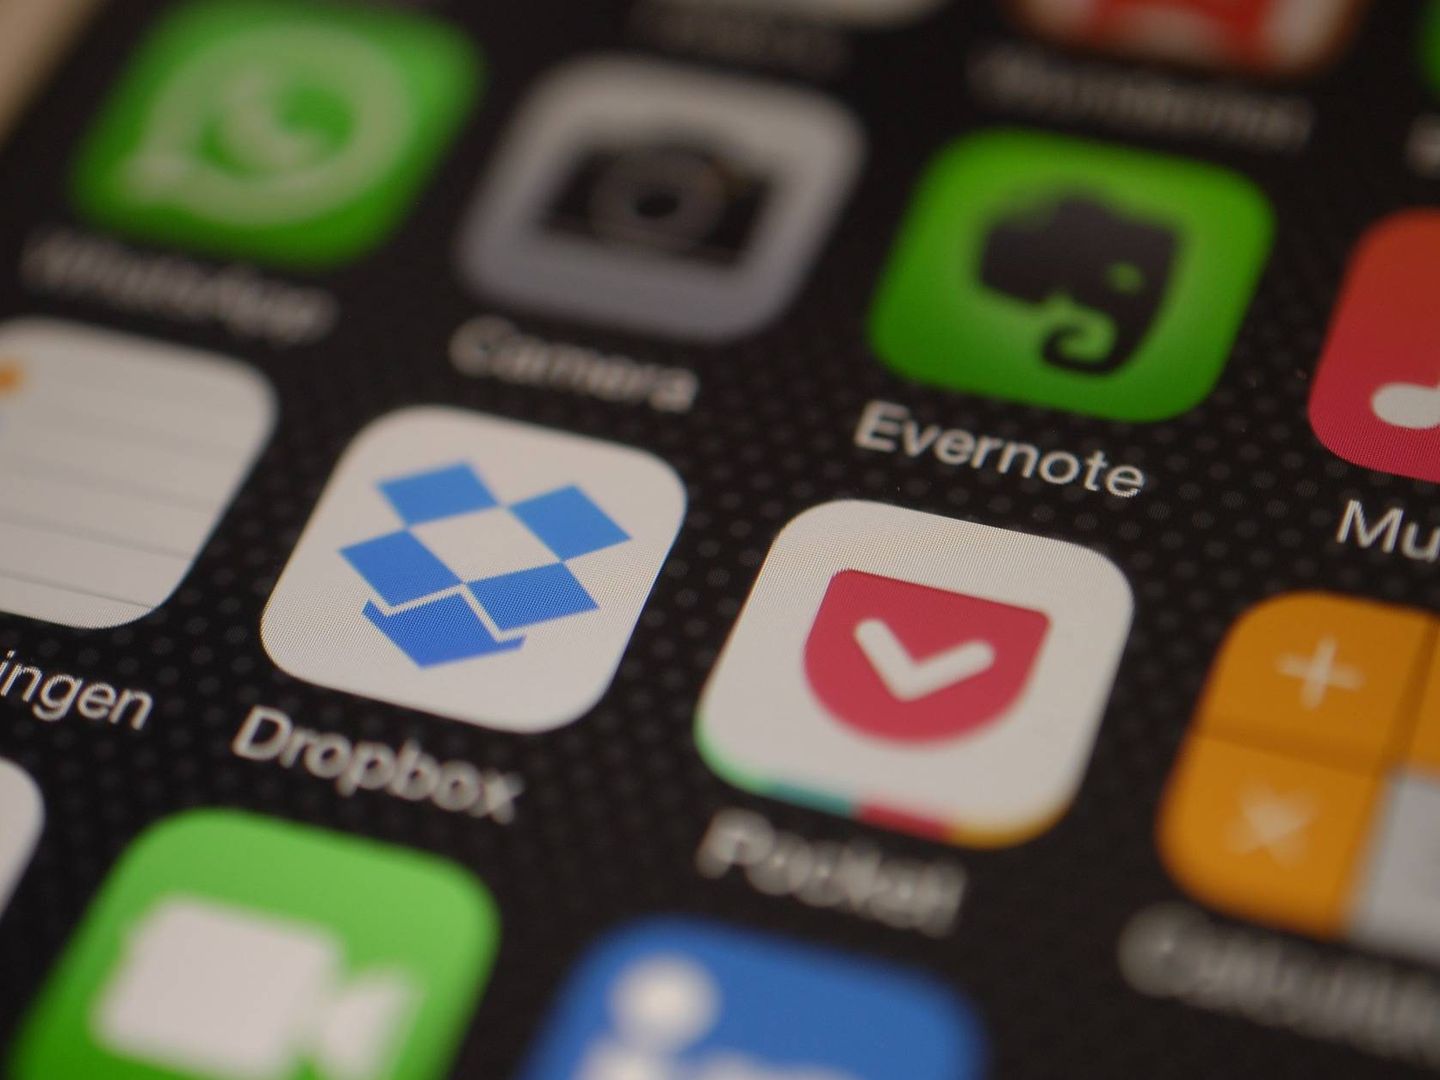 Dropbox te ayuda a organizar tu teléfono móvil. (Pixabay)